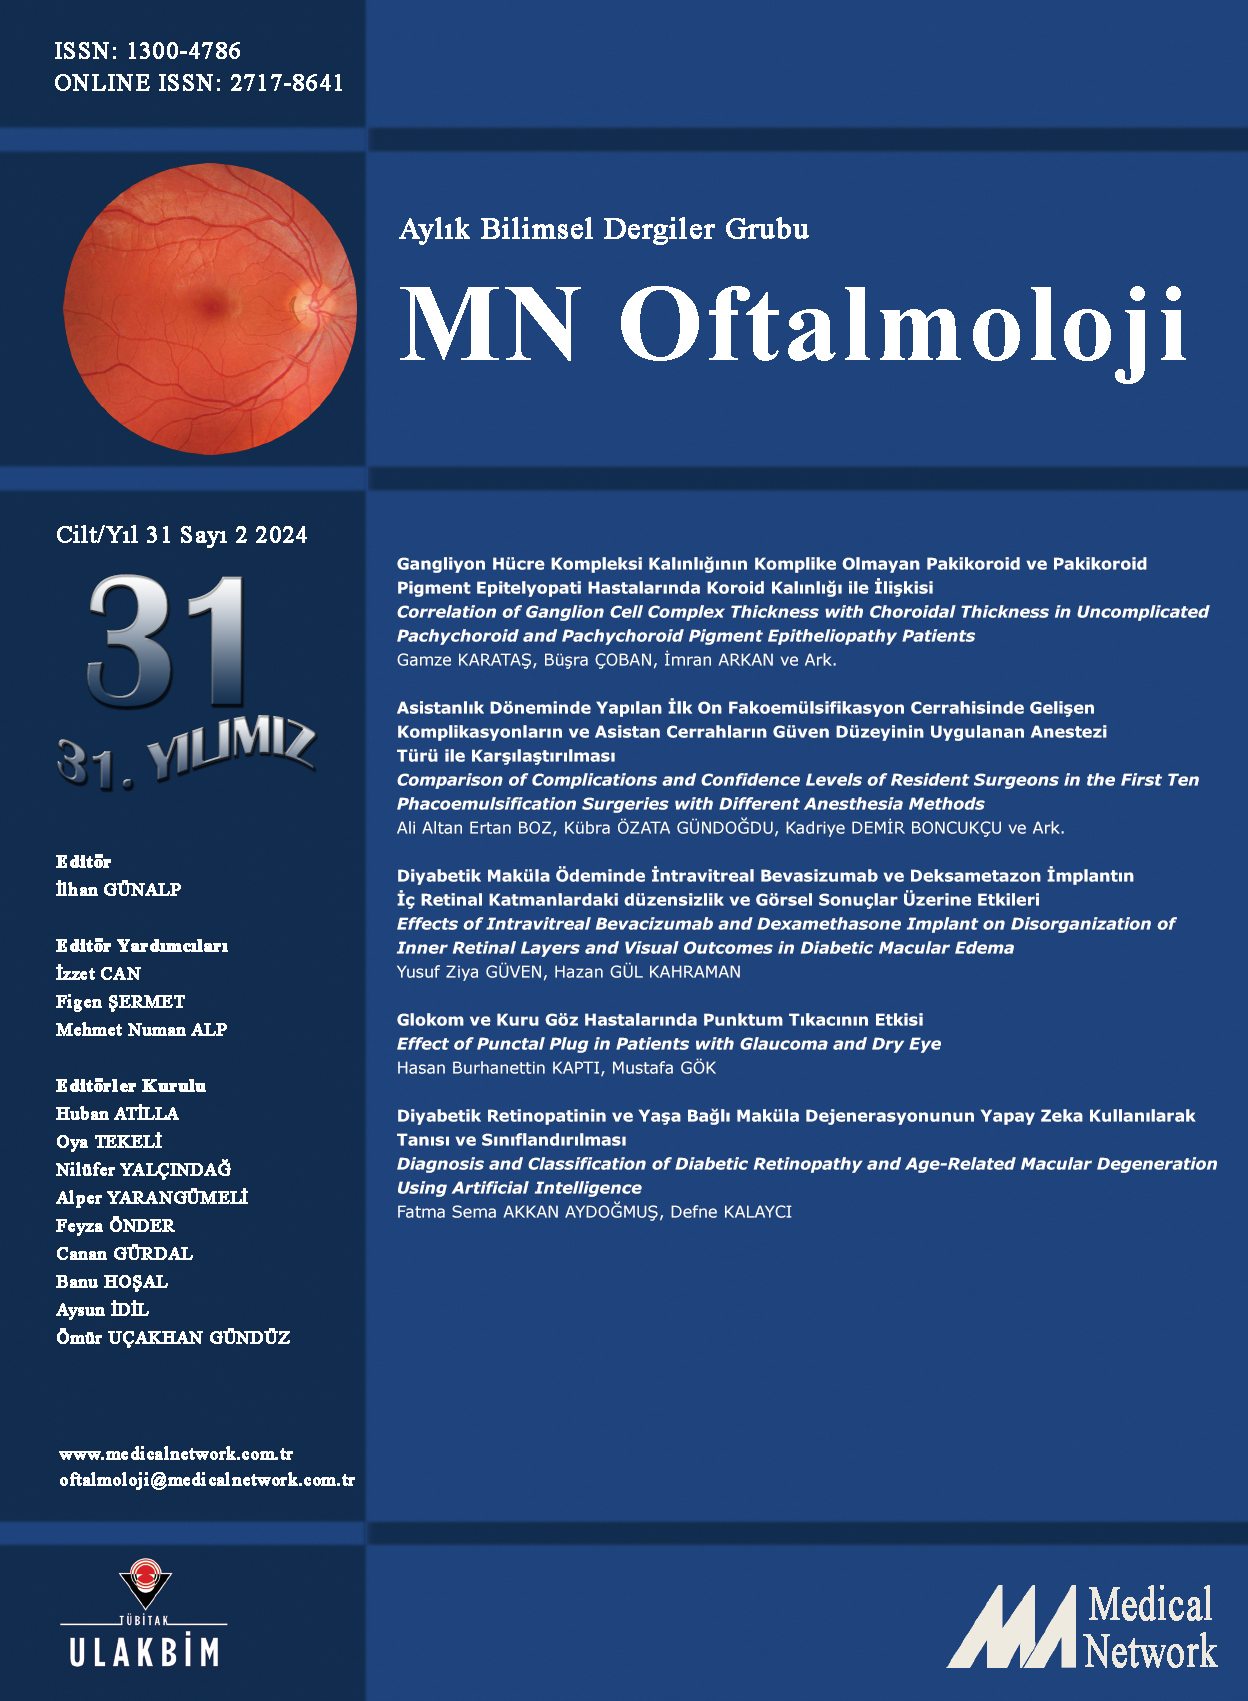 <p>MN Oftalmoloji Cilt: 31 Say: 2 2024 (MN Ophthalmology Volume: 31 No: 2 2024)</p>